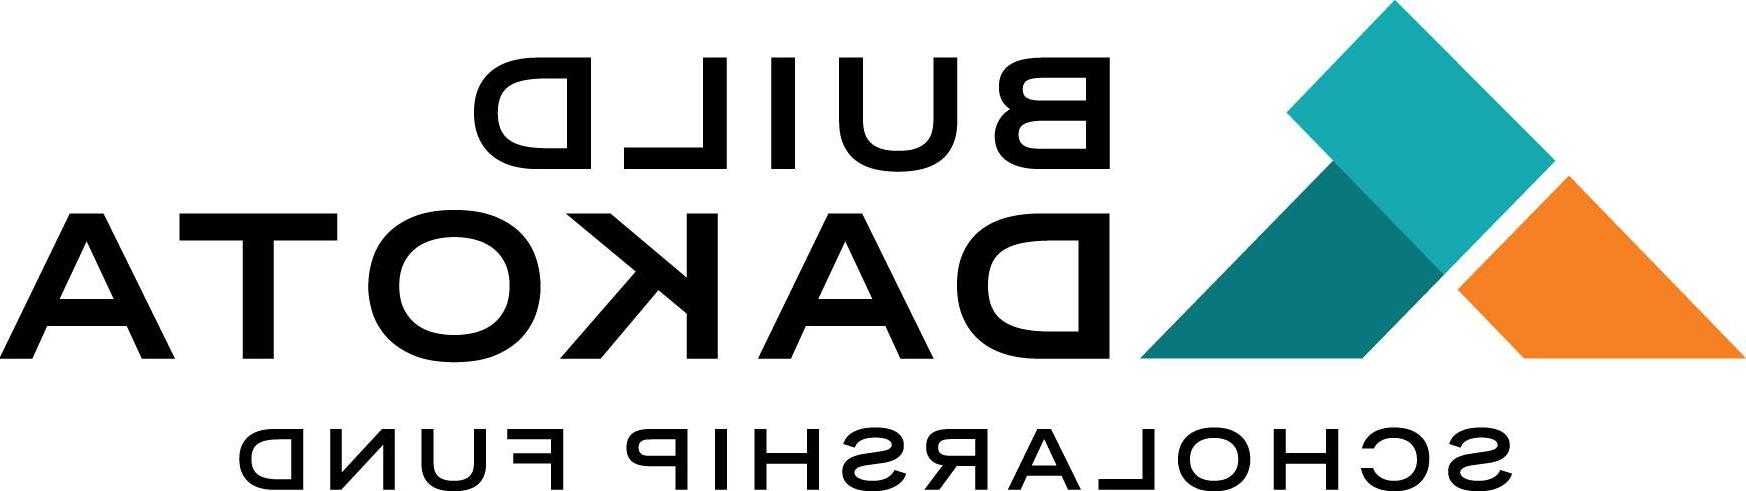 build dakota logo